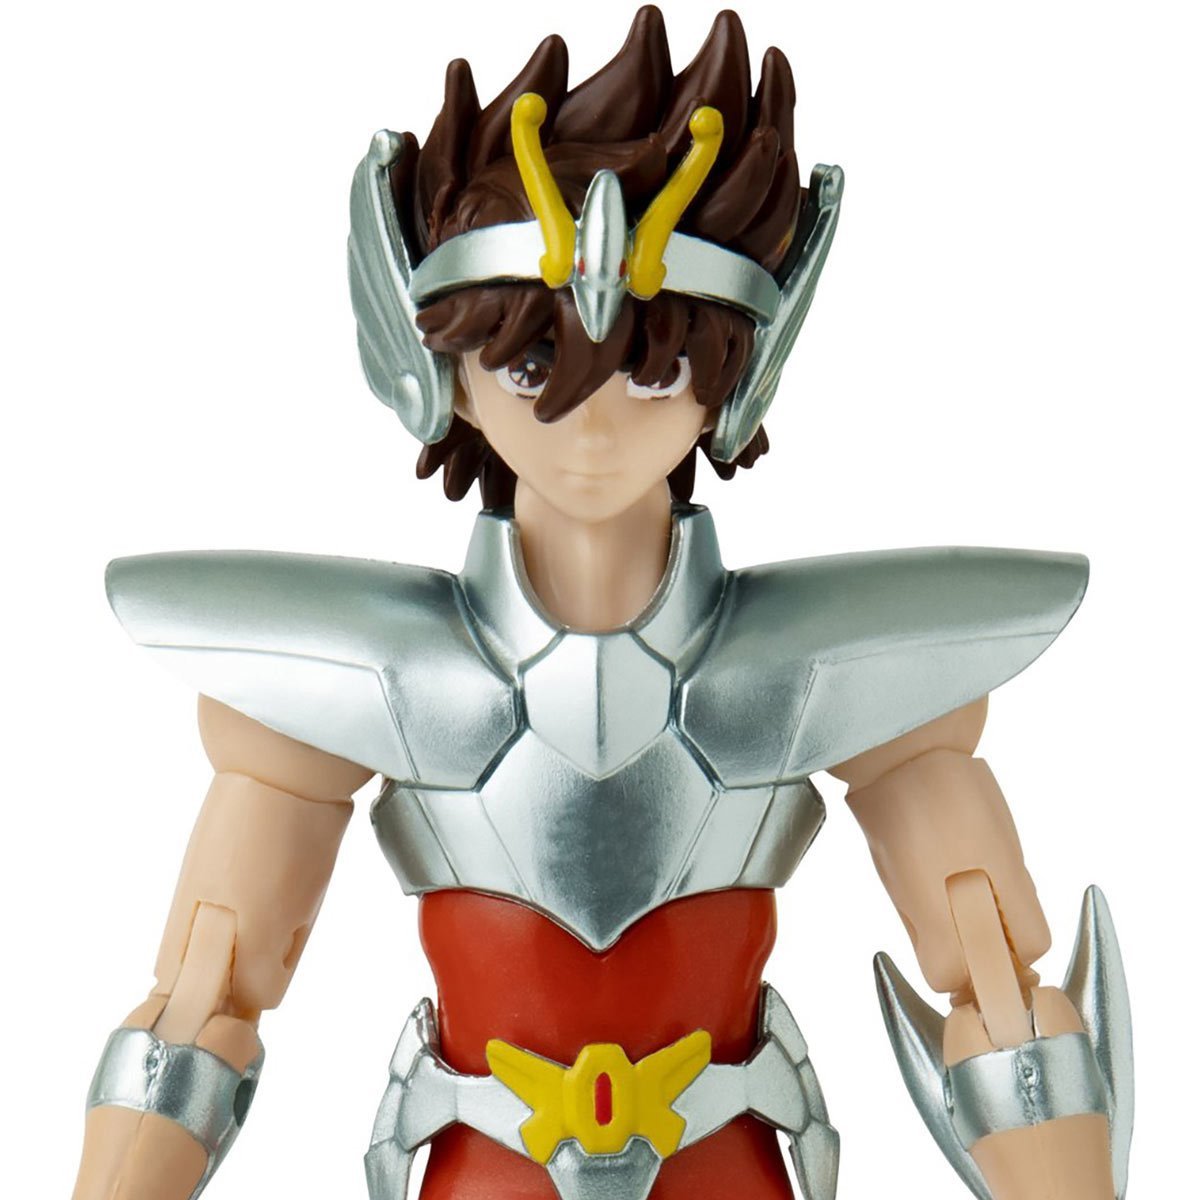 Bandai Anime Heroes Knights of the Zodiac Saint Seiya Pegasus Seiya Figure  New